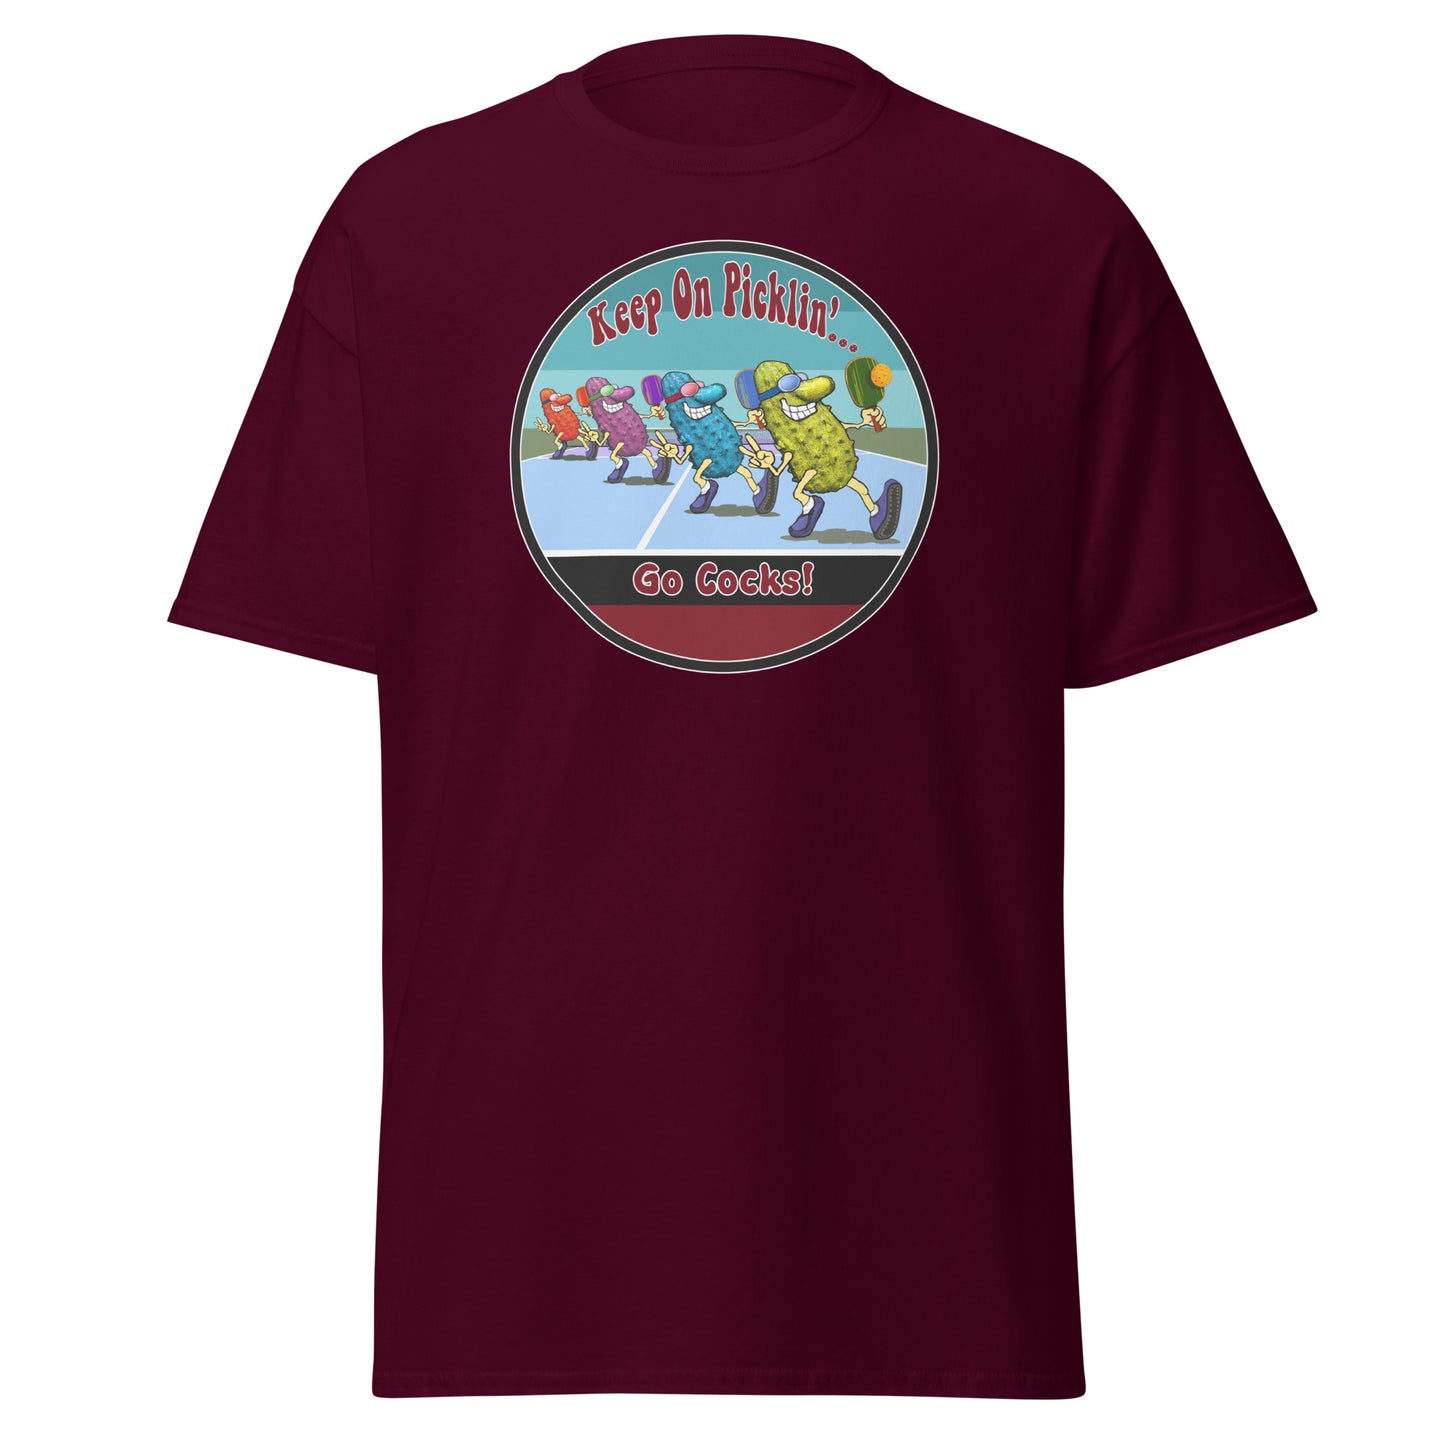 South Carolina Gamecocks Pickleball Shirt, Short-sleeve Tee, Retro Stripes Graphic